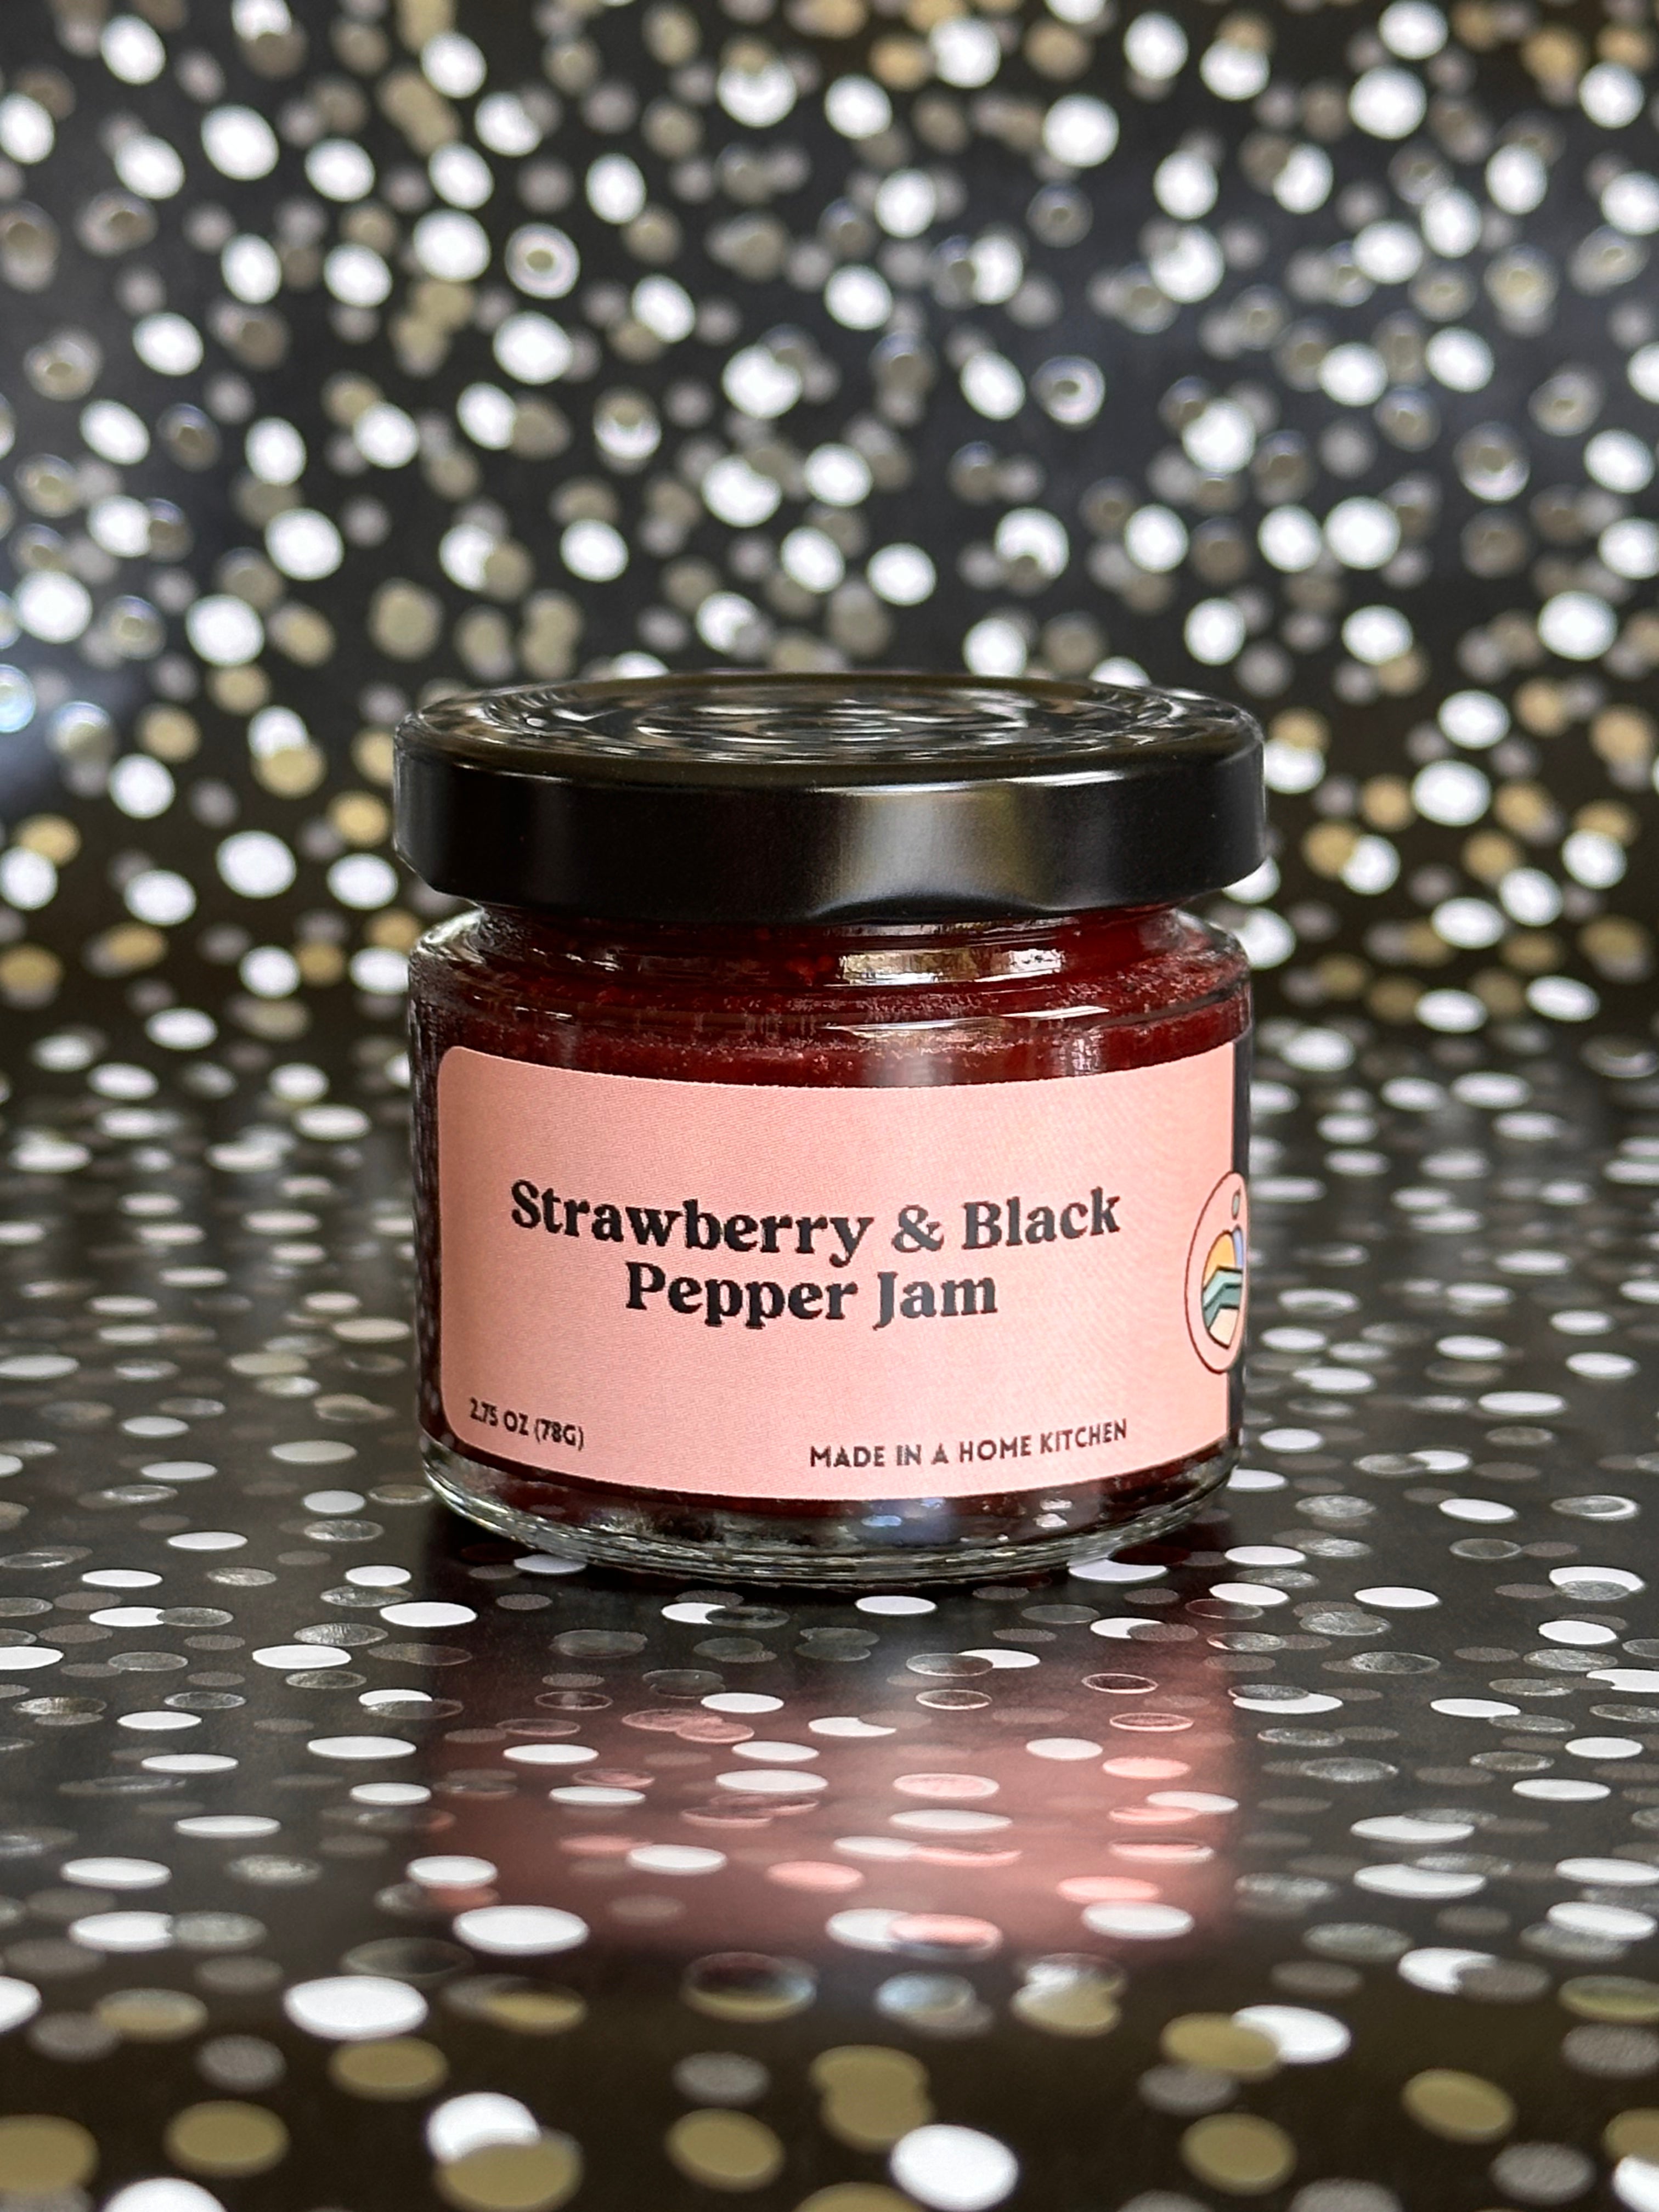 Strawberry Jam with Black Pepper